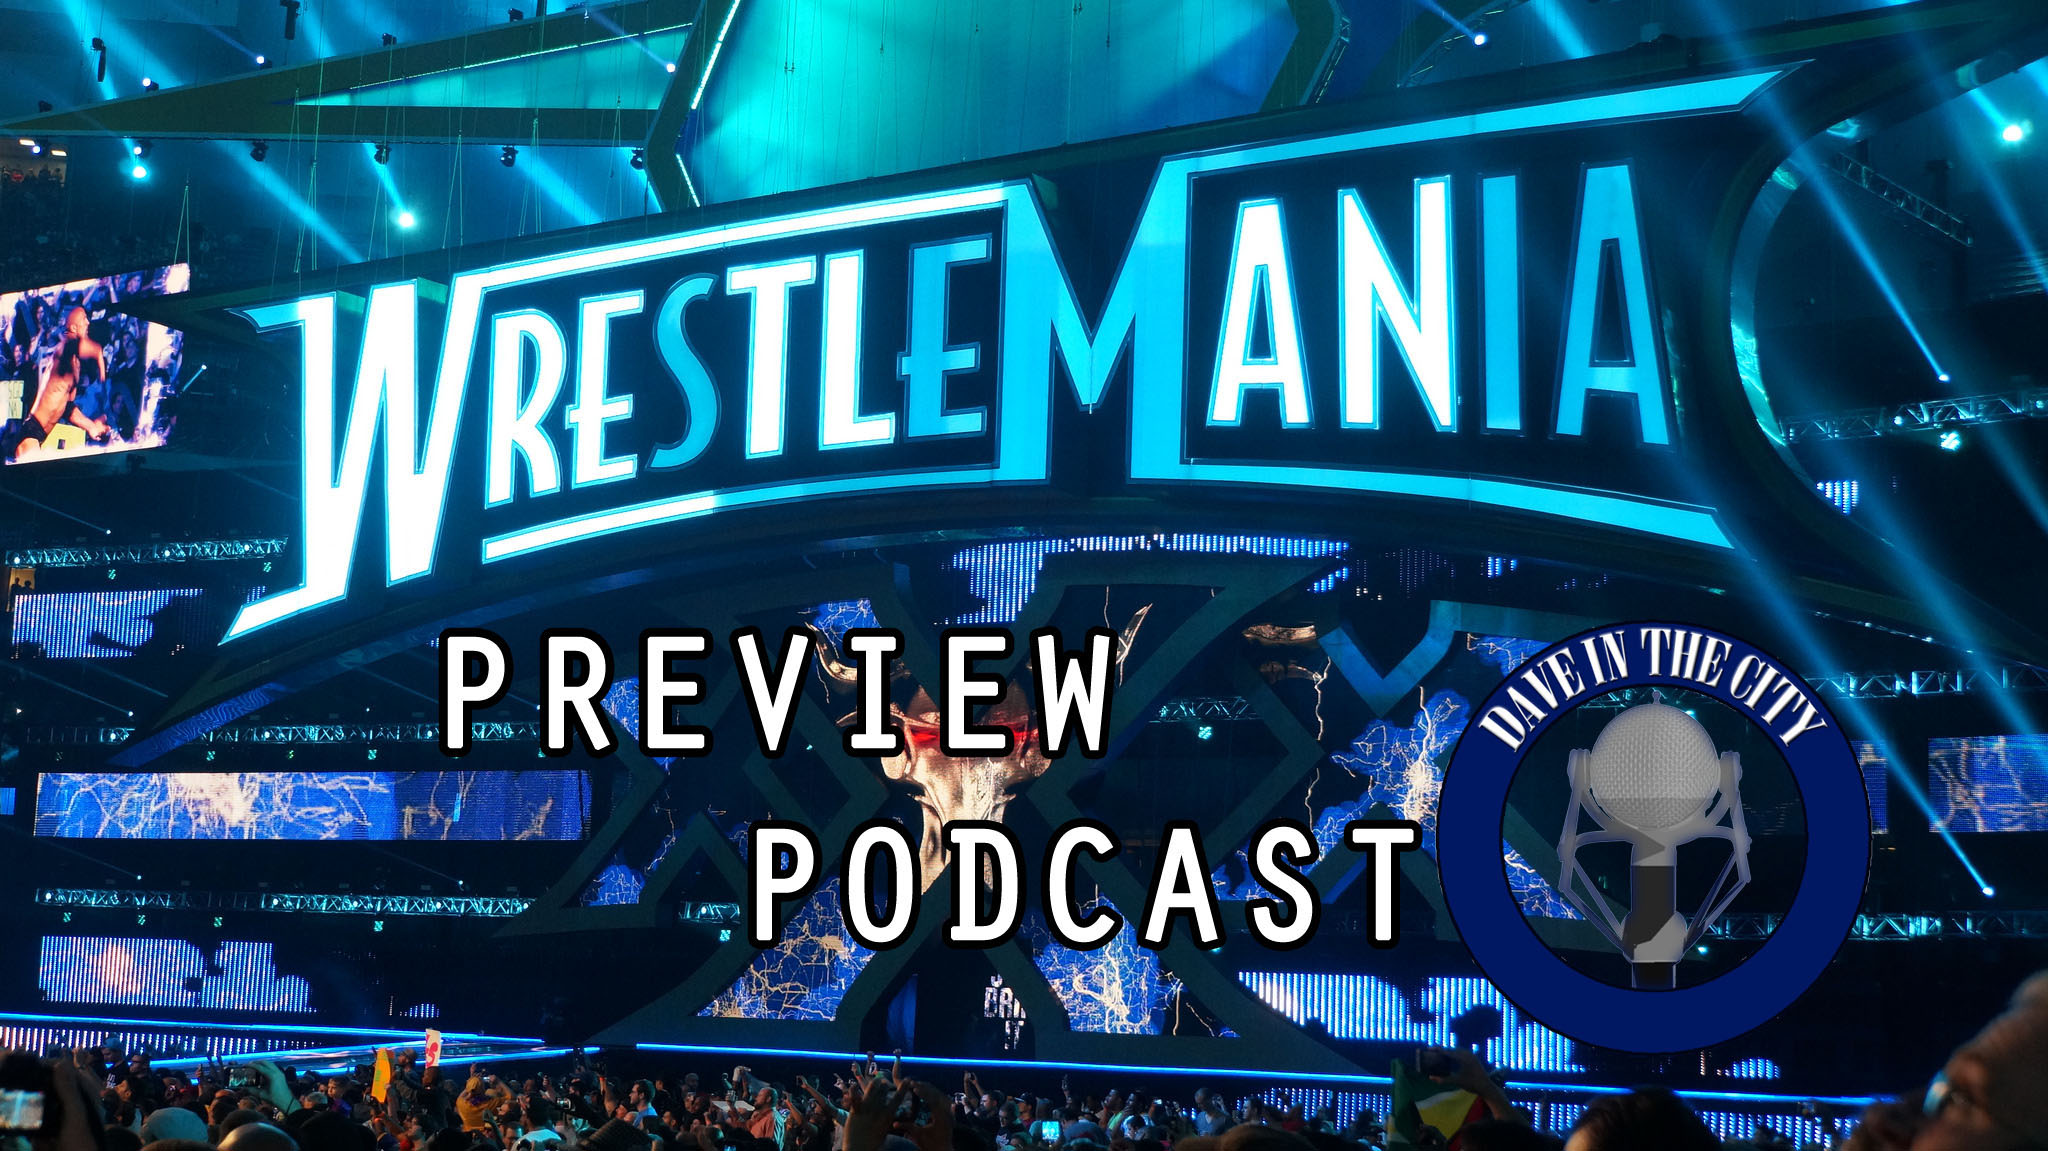 WWE Wrestlemania 31 Preview Podcast w/ Ari, ACQ, John, Parcells, Umbertos (03-24-15)